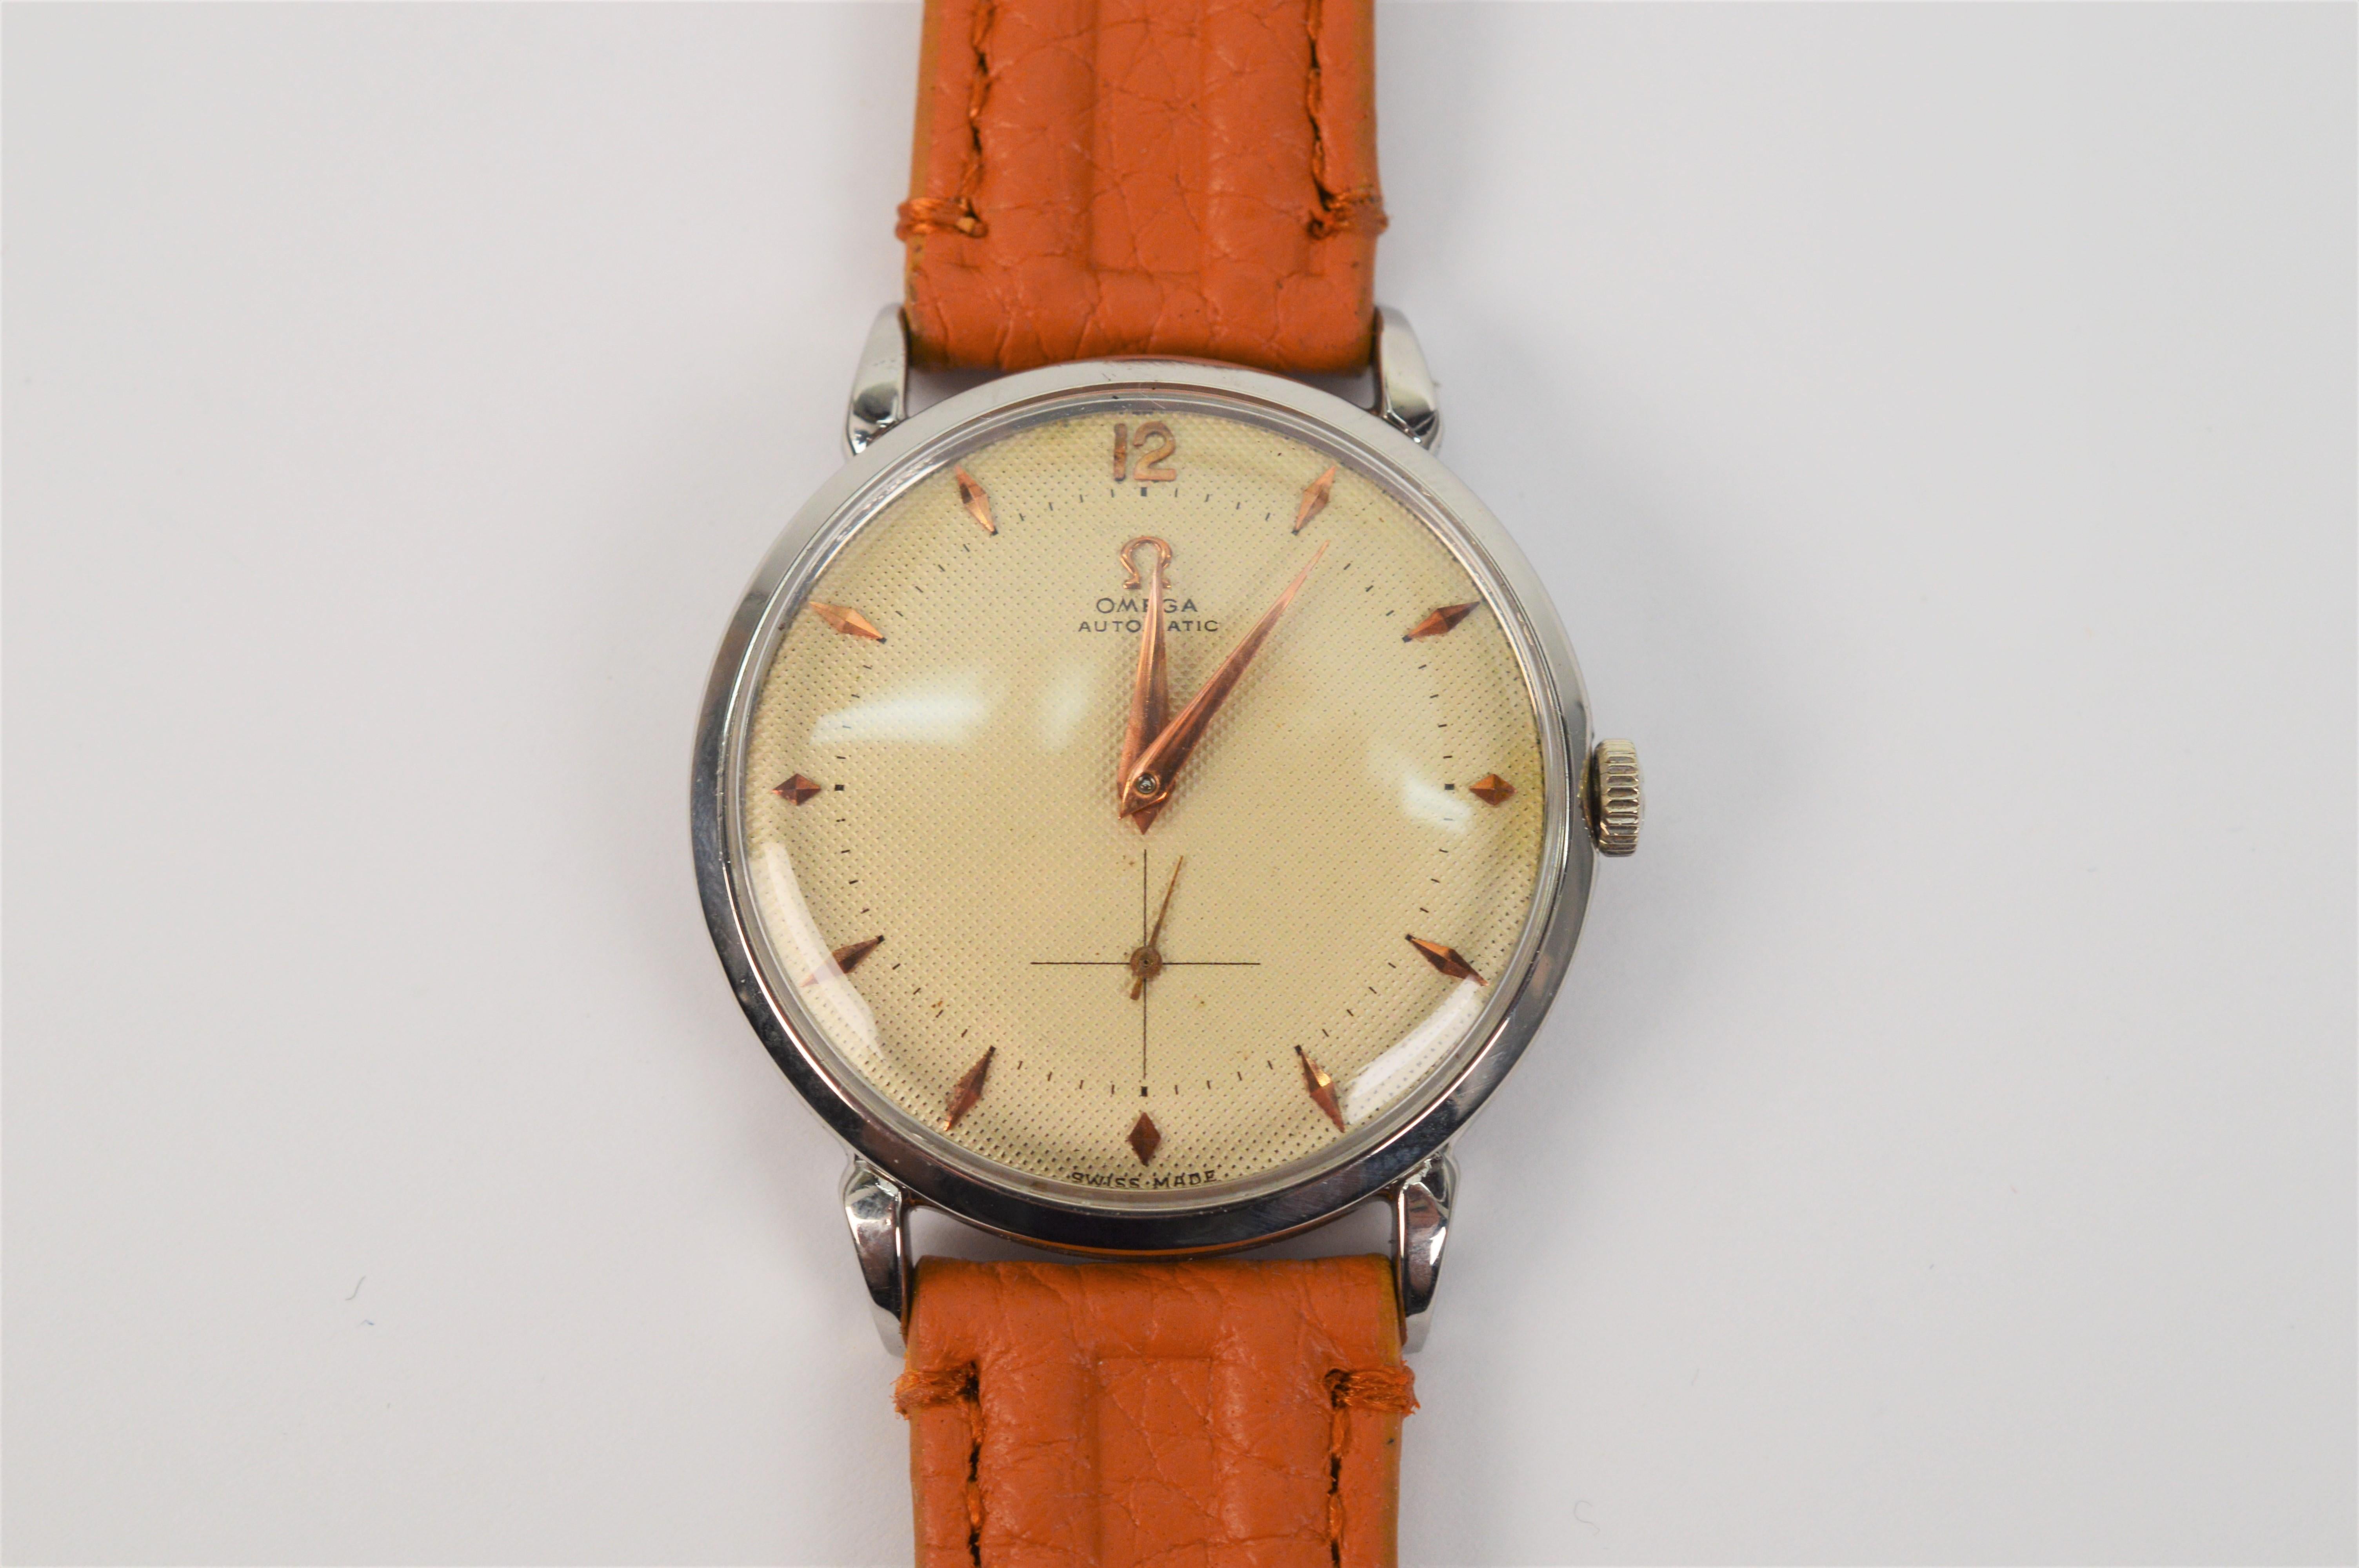 Circa 1952 Omega 342 Steel Automatic Men's Wrist Watch 1